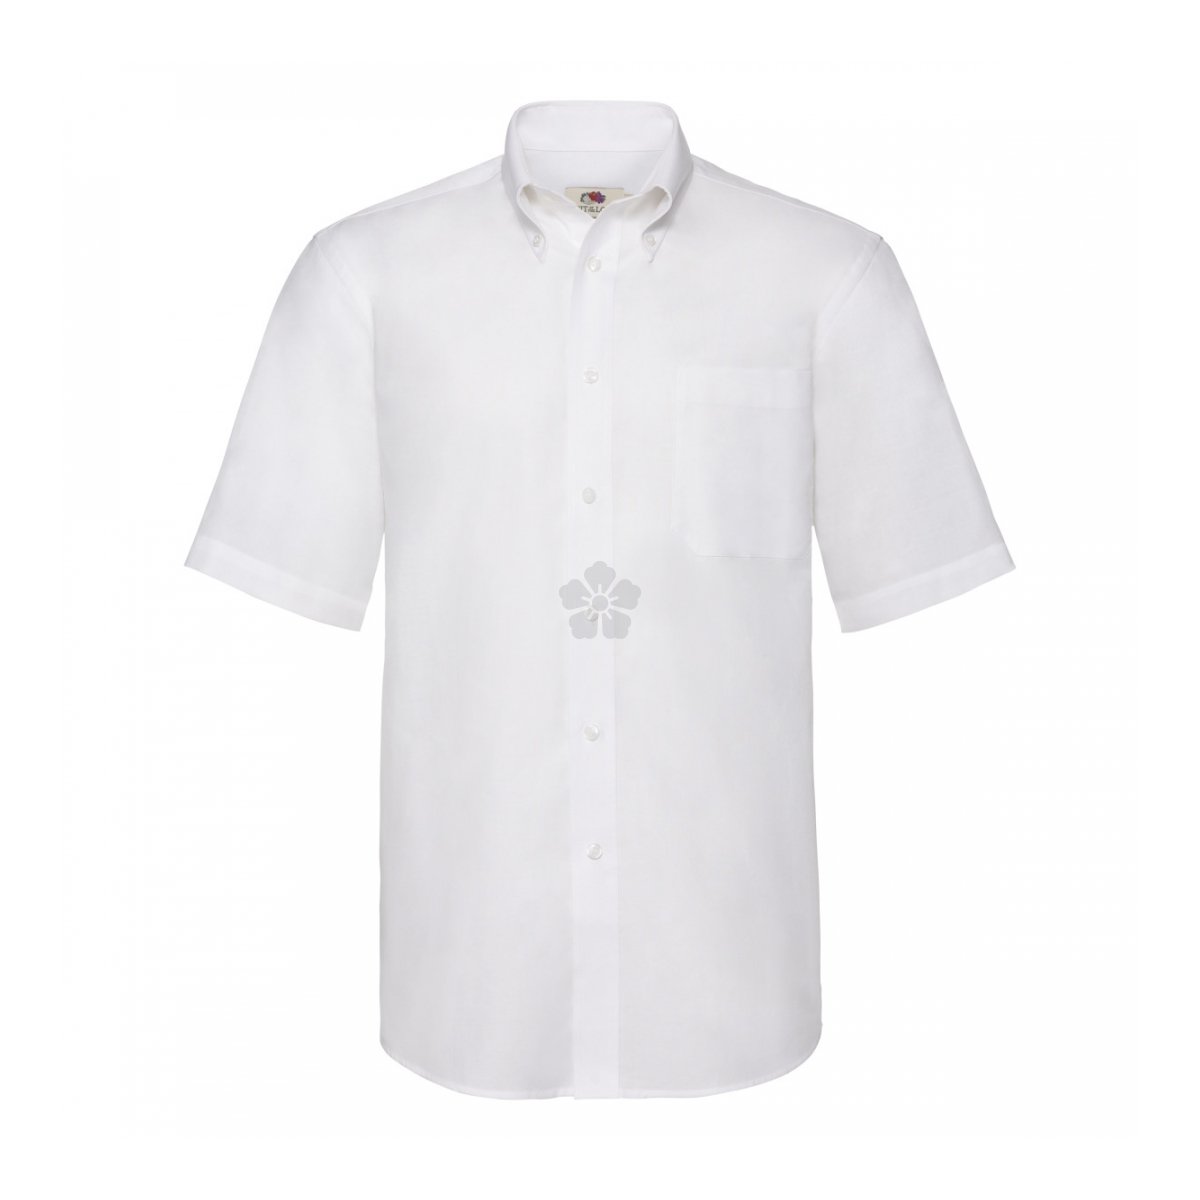 Promotional Fruit of The Loom Men's Short Sleeve Oxford Shirt ...